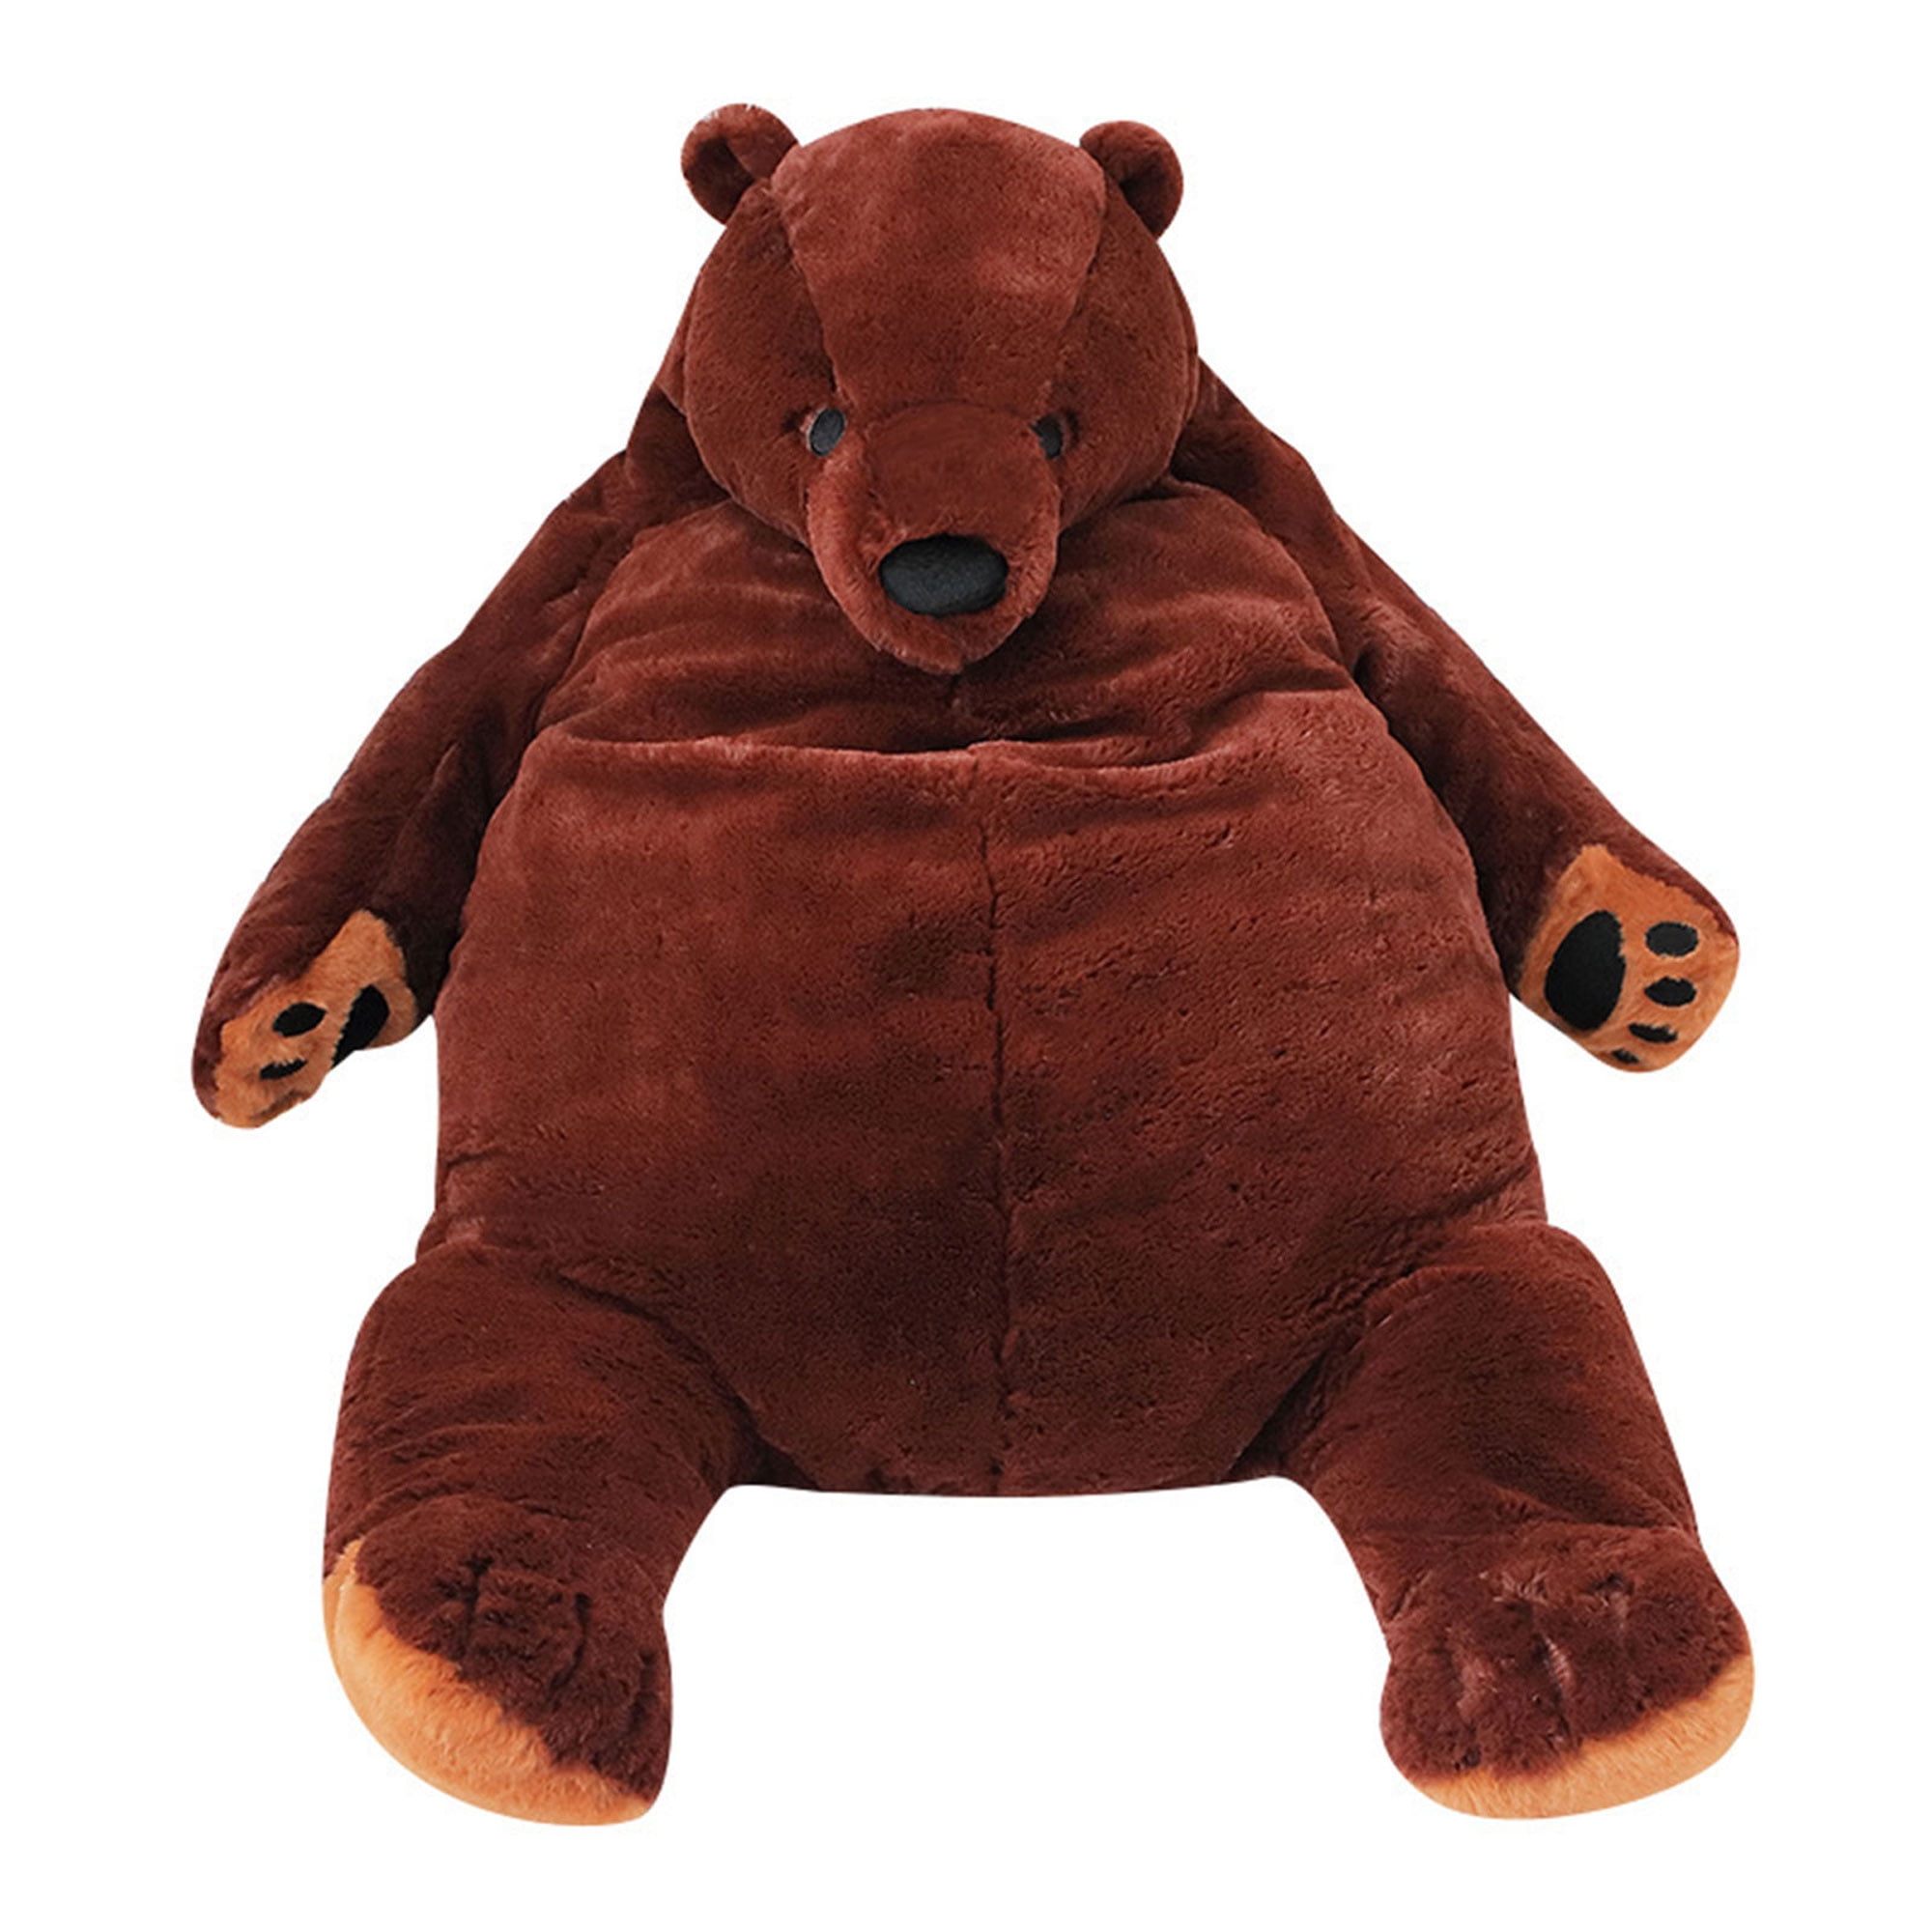 60cm Giant Simulation Soft Plush Toy Brown Teddy Bear Stuffed Animal Gift Toys 